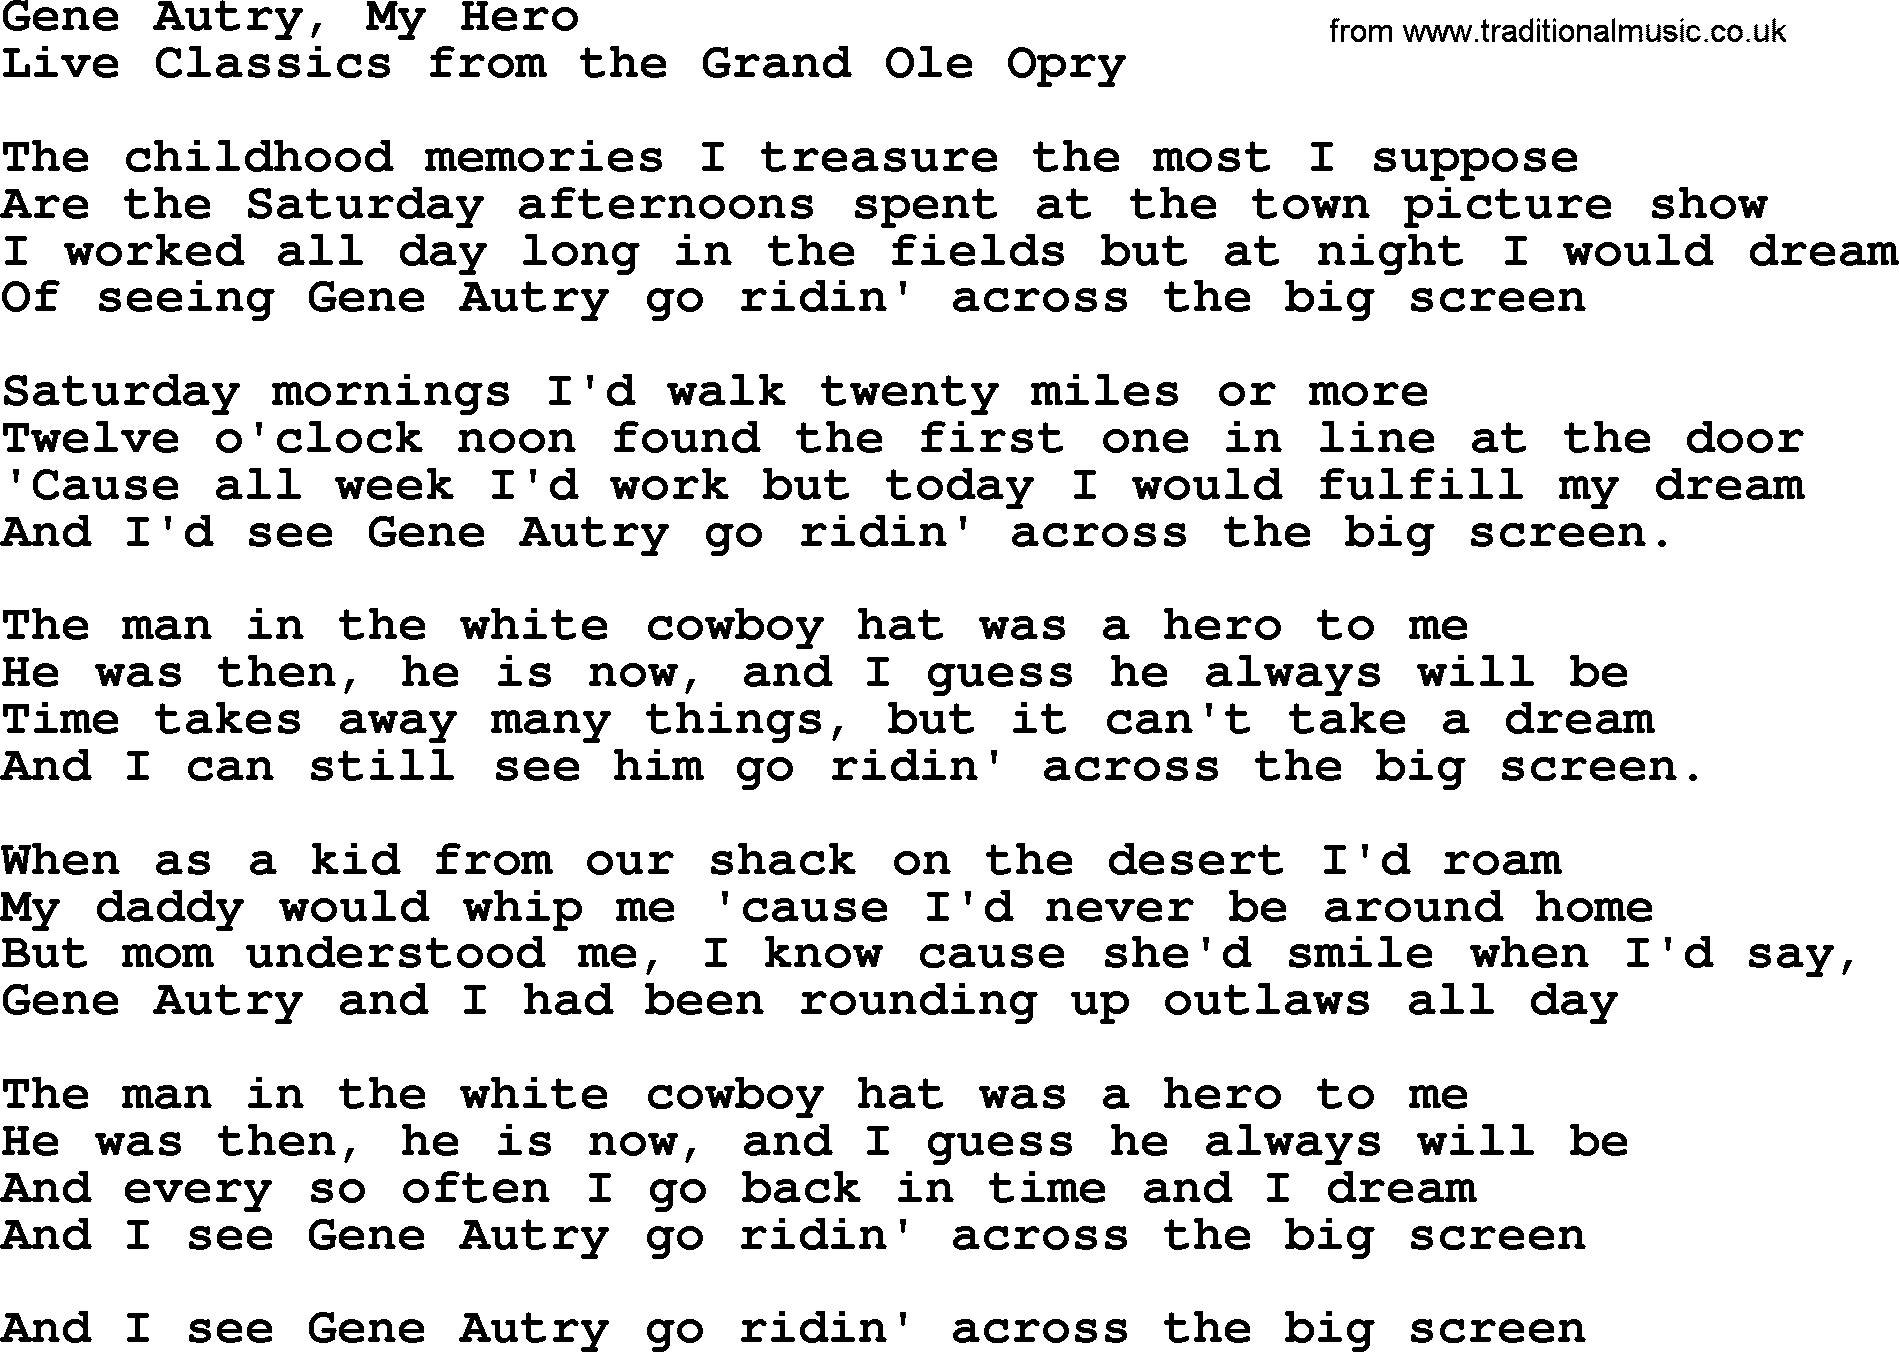 Gene Autry My Hero, by Marty Robbins - lyrics